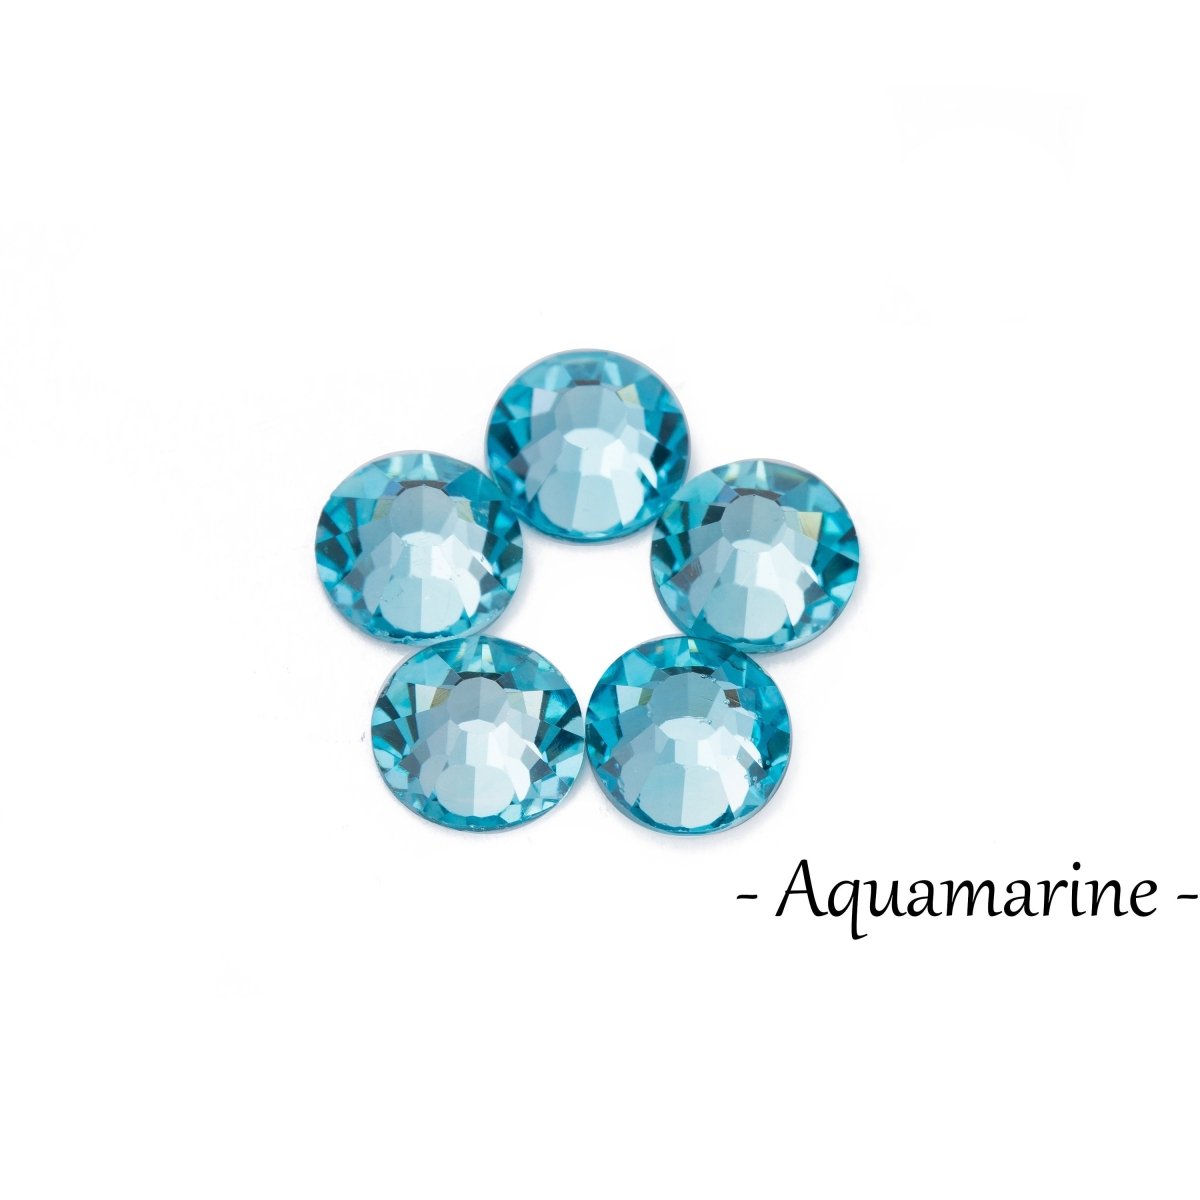 288 pcs High Quality Crystal Aqua Blue Aquamarine Crystal Rhinestones loose flat back No Hot Fix bead Size ss 30 / ss 34, SS30-AQUA - DLUXCA